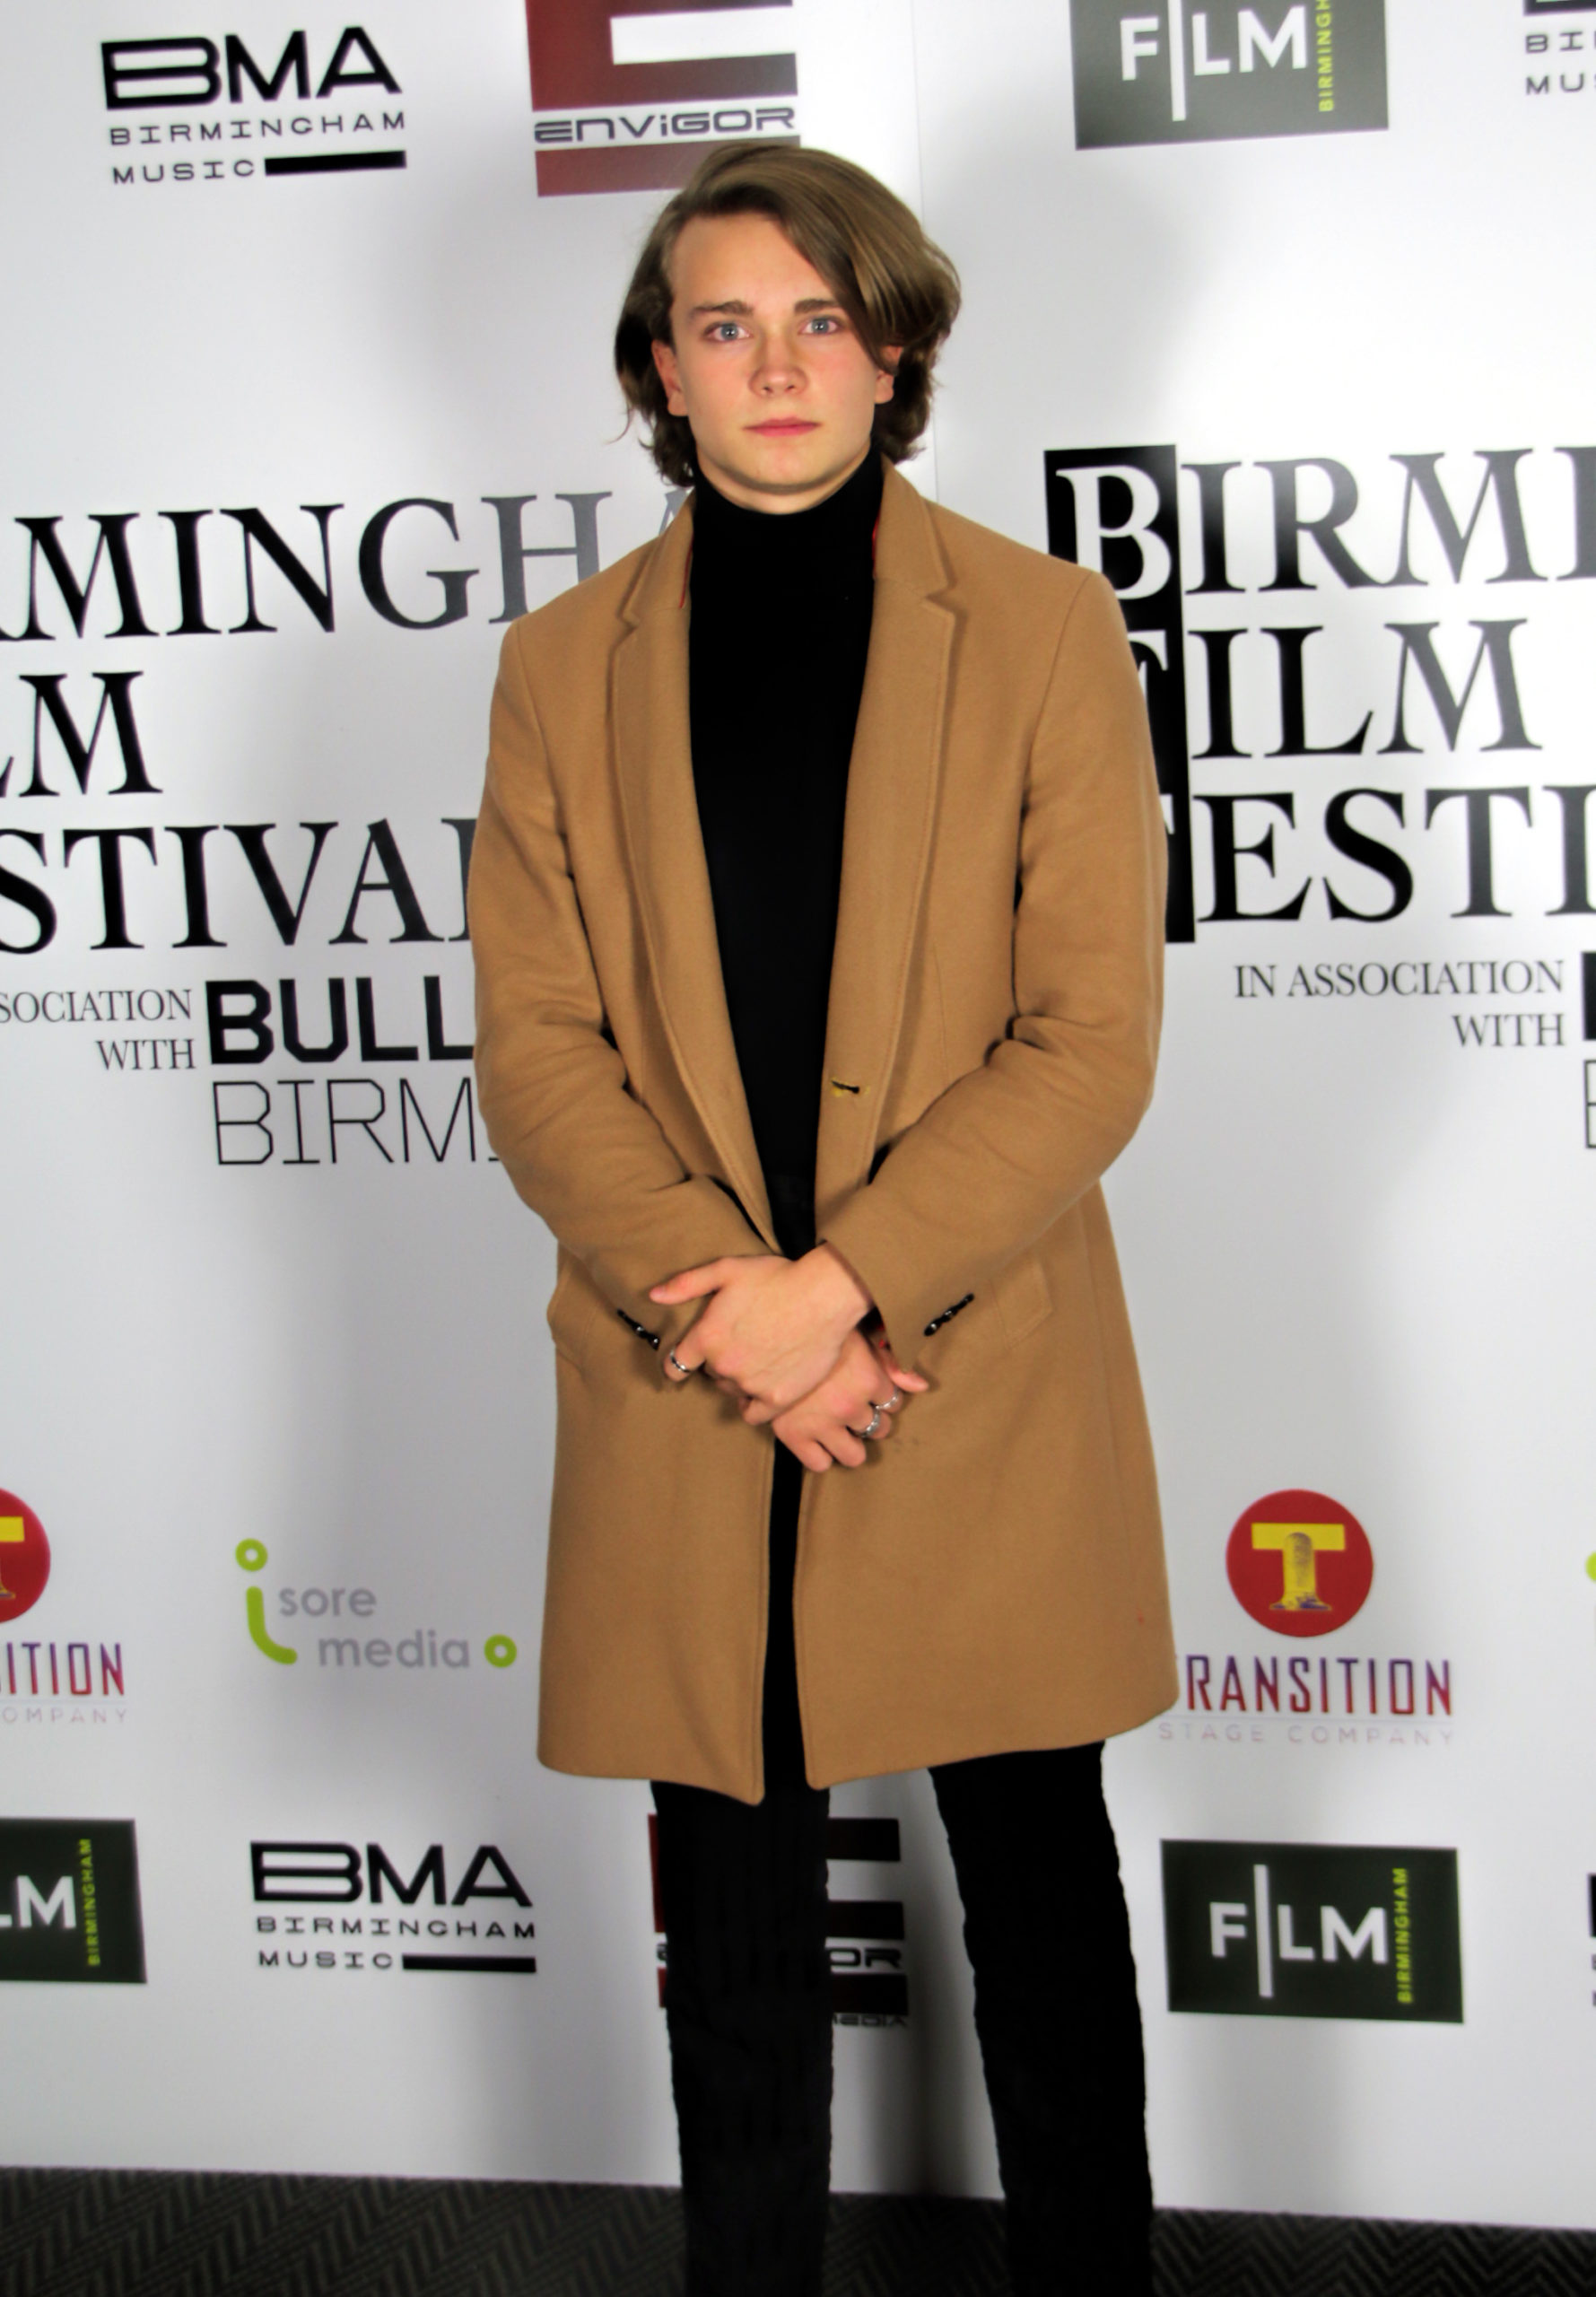 Birmingham Film Festival - Anton Forsdik